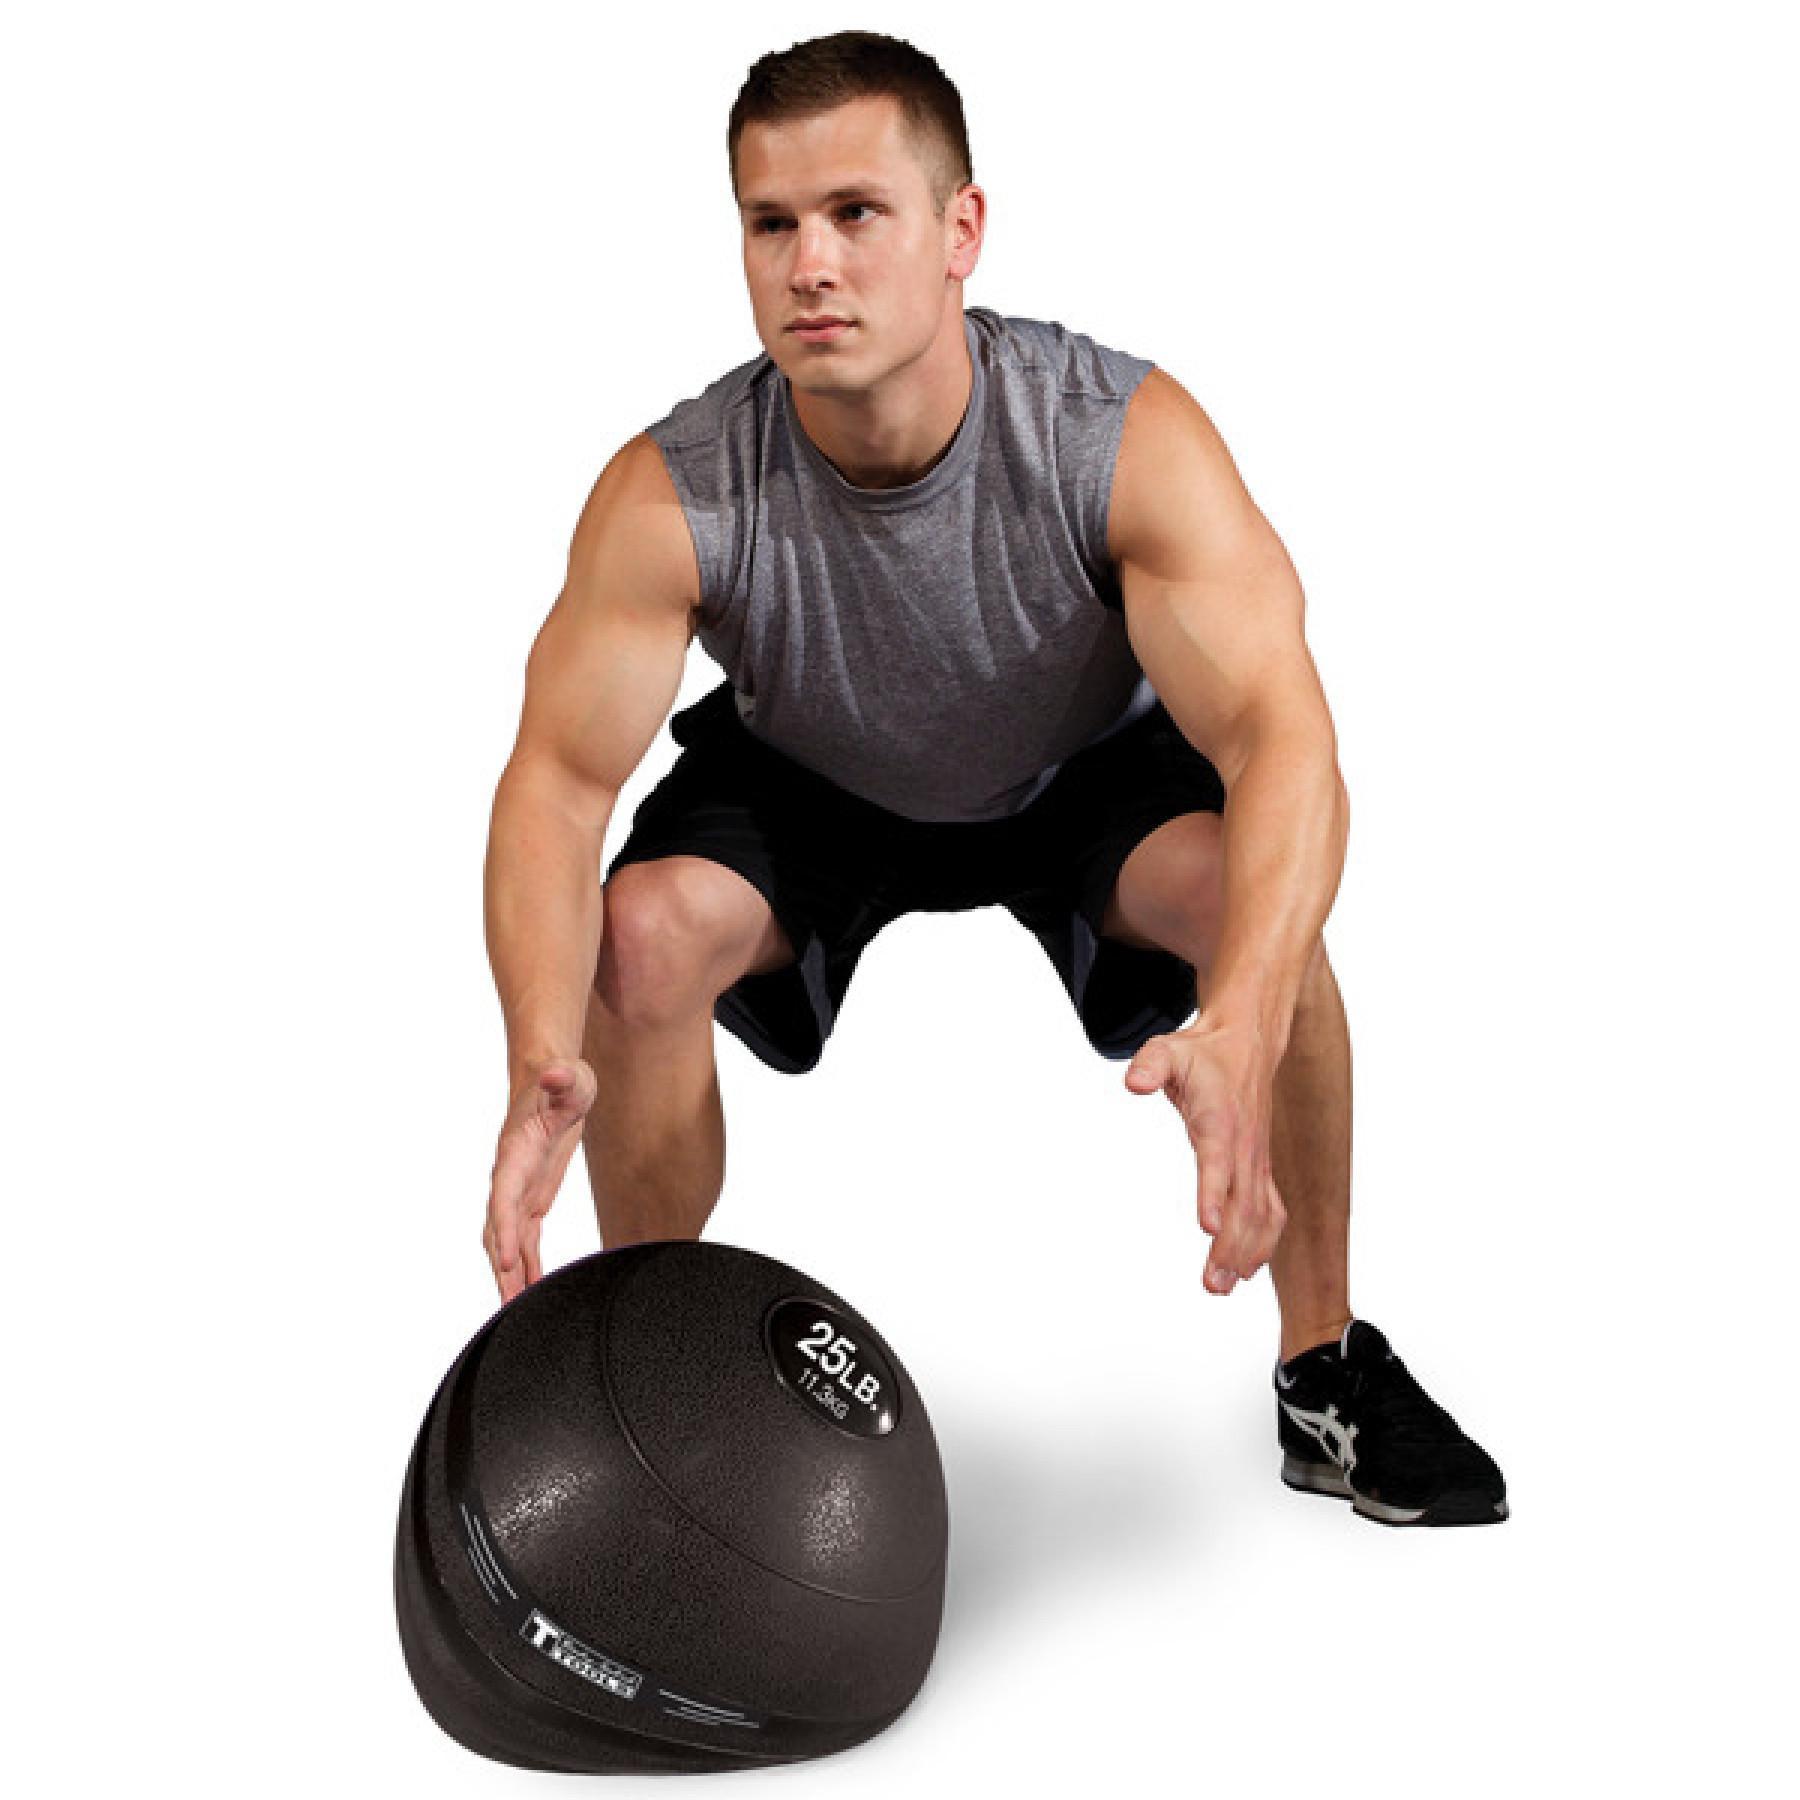 Slam ball 25 lb - 11.3 kg Body Solid